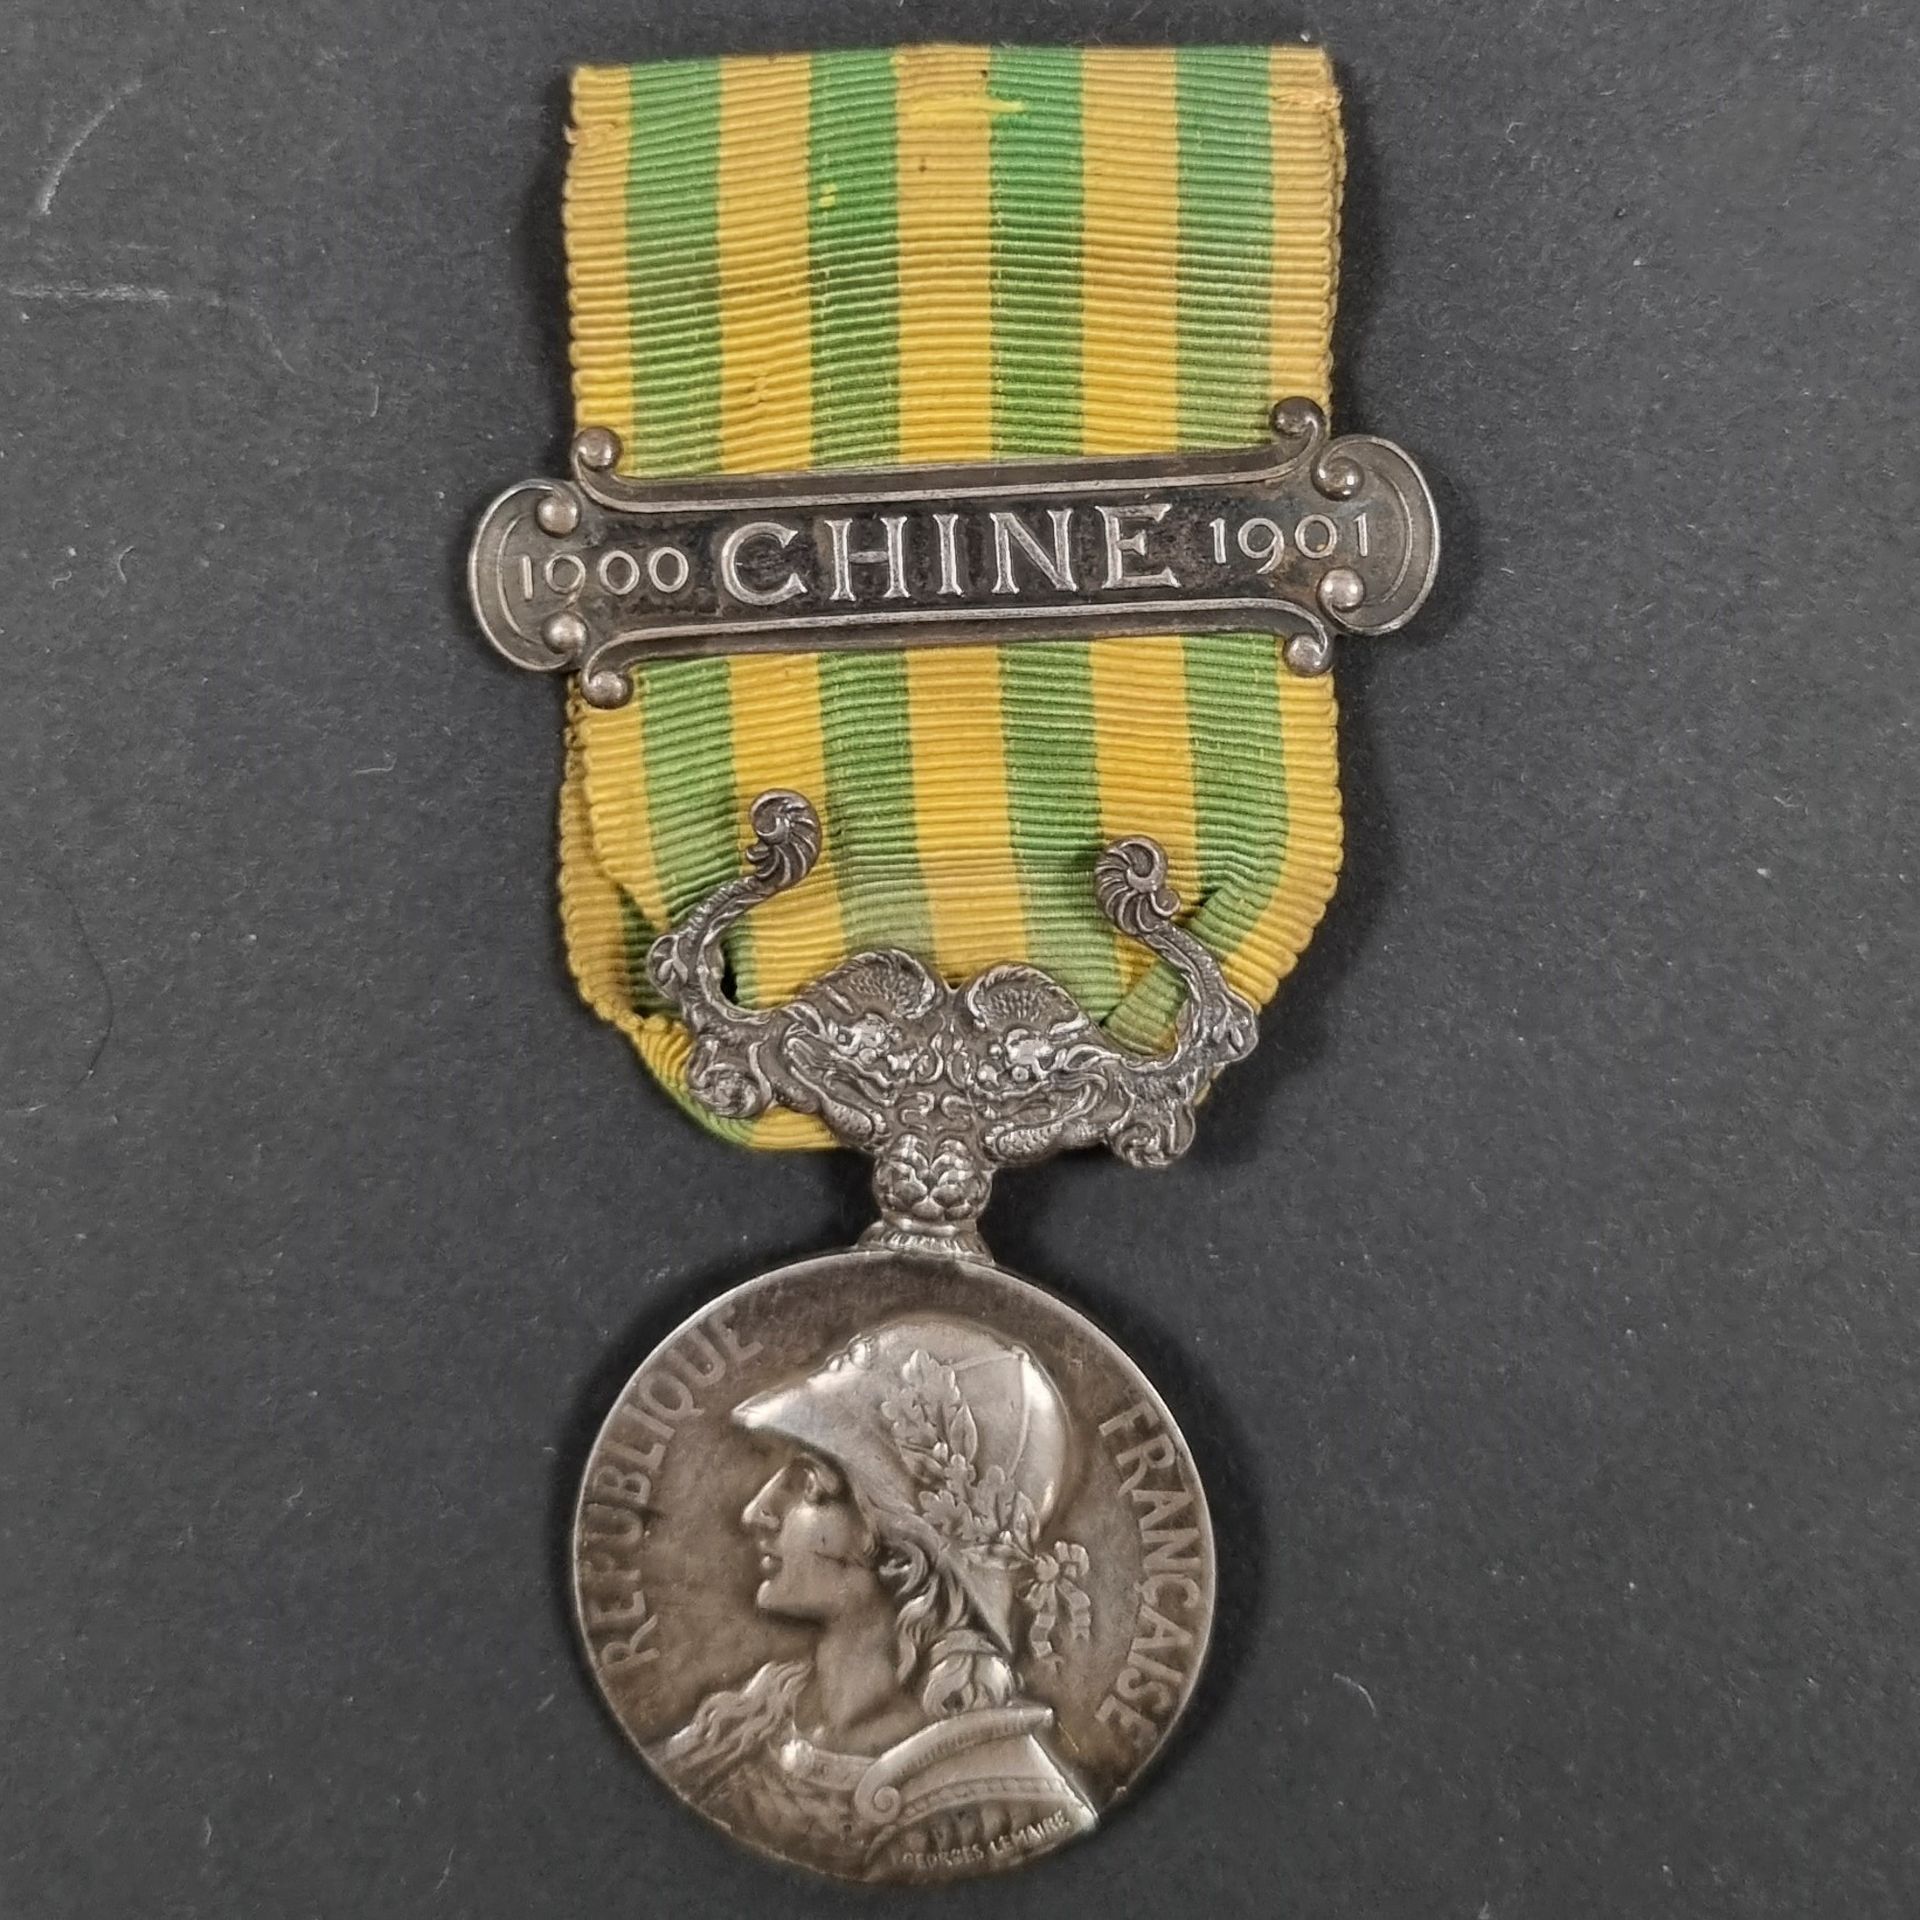 Null 法国 
中国奖牌（1900-1901），由Lemaire制作。 
银制。边缘有造币厂的印记。绶带上有银扣 "1900-CHINA-1901"。
49 &hellip;